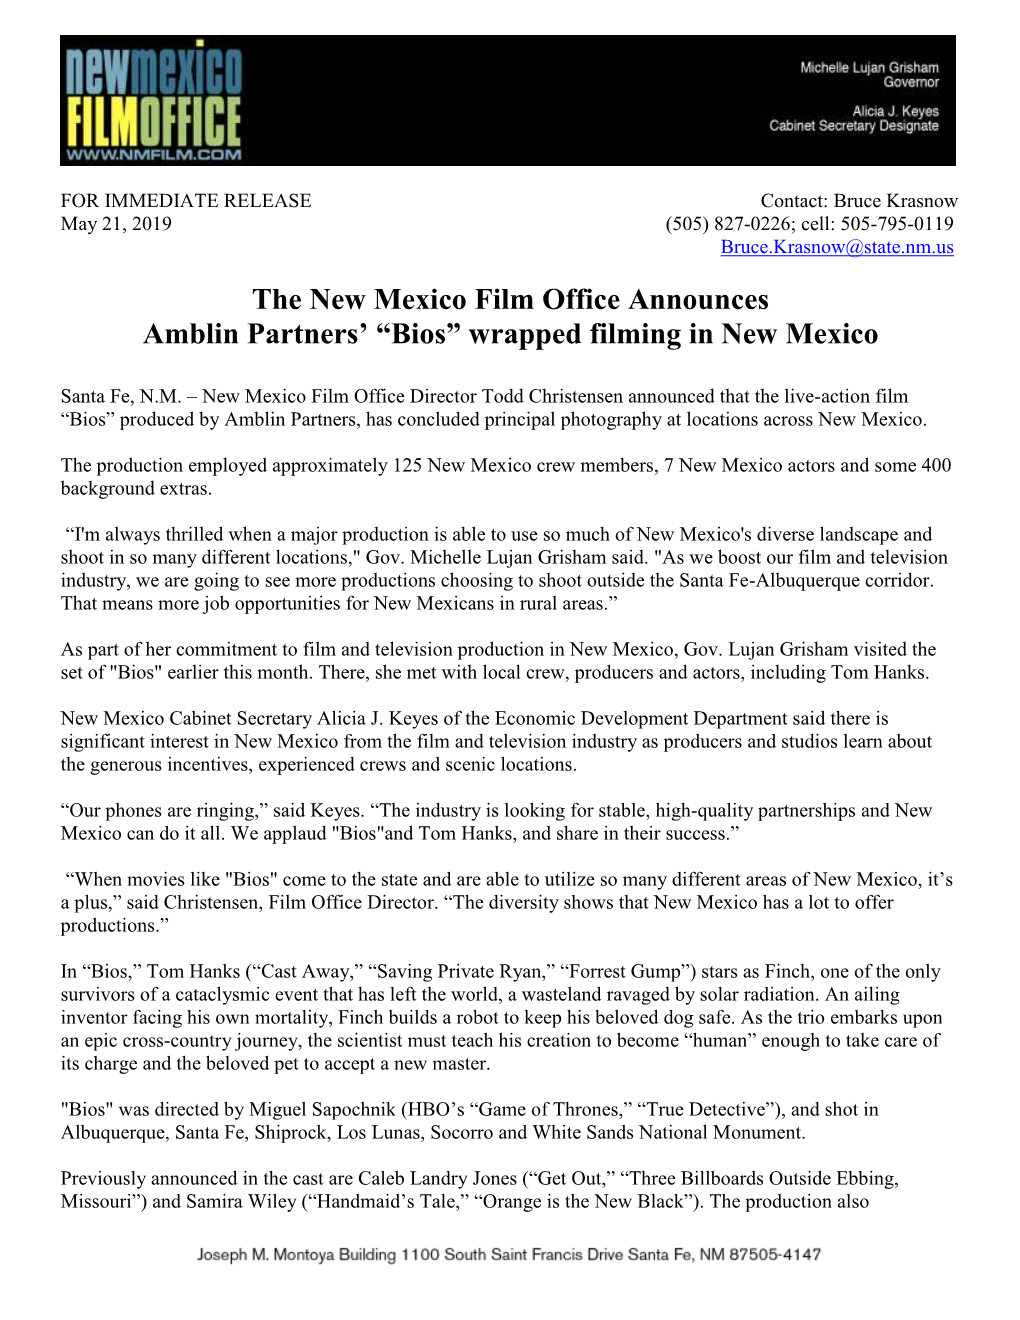 The New Mexico Film Office Announces Amblin Partners' “Bios